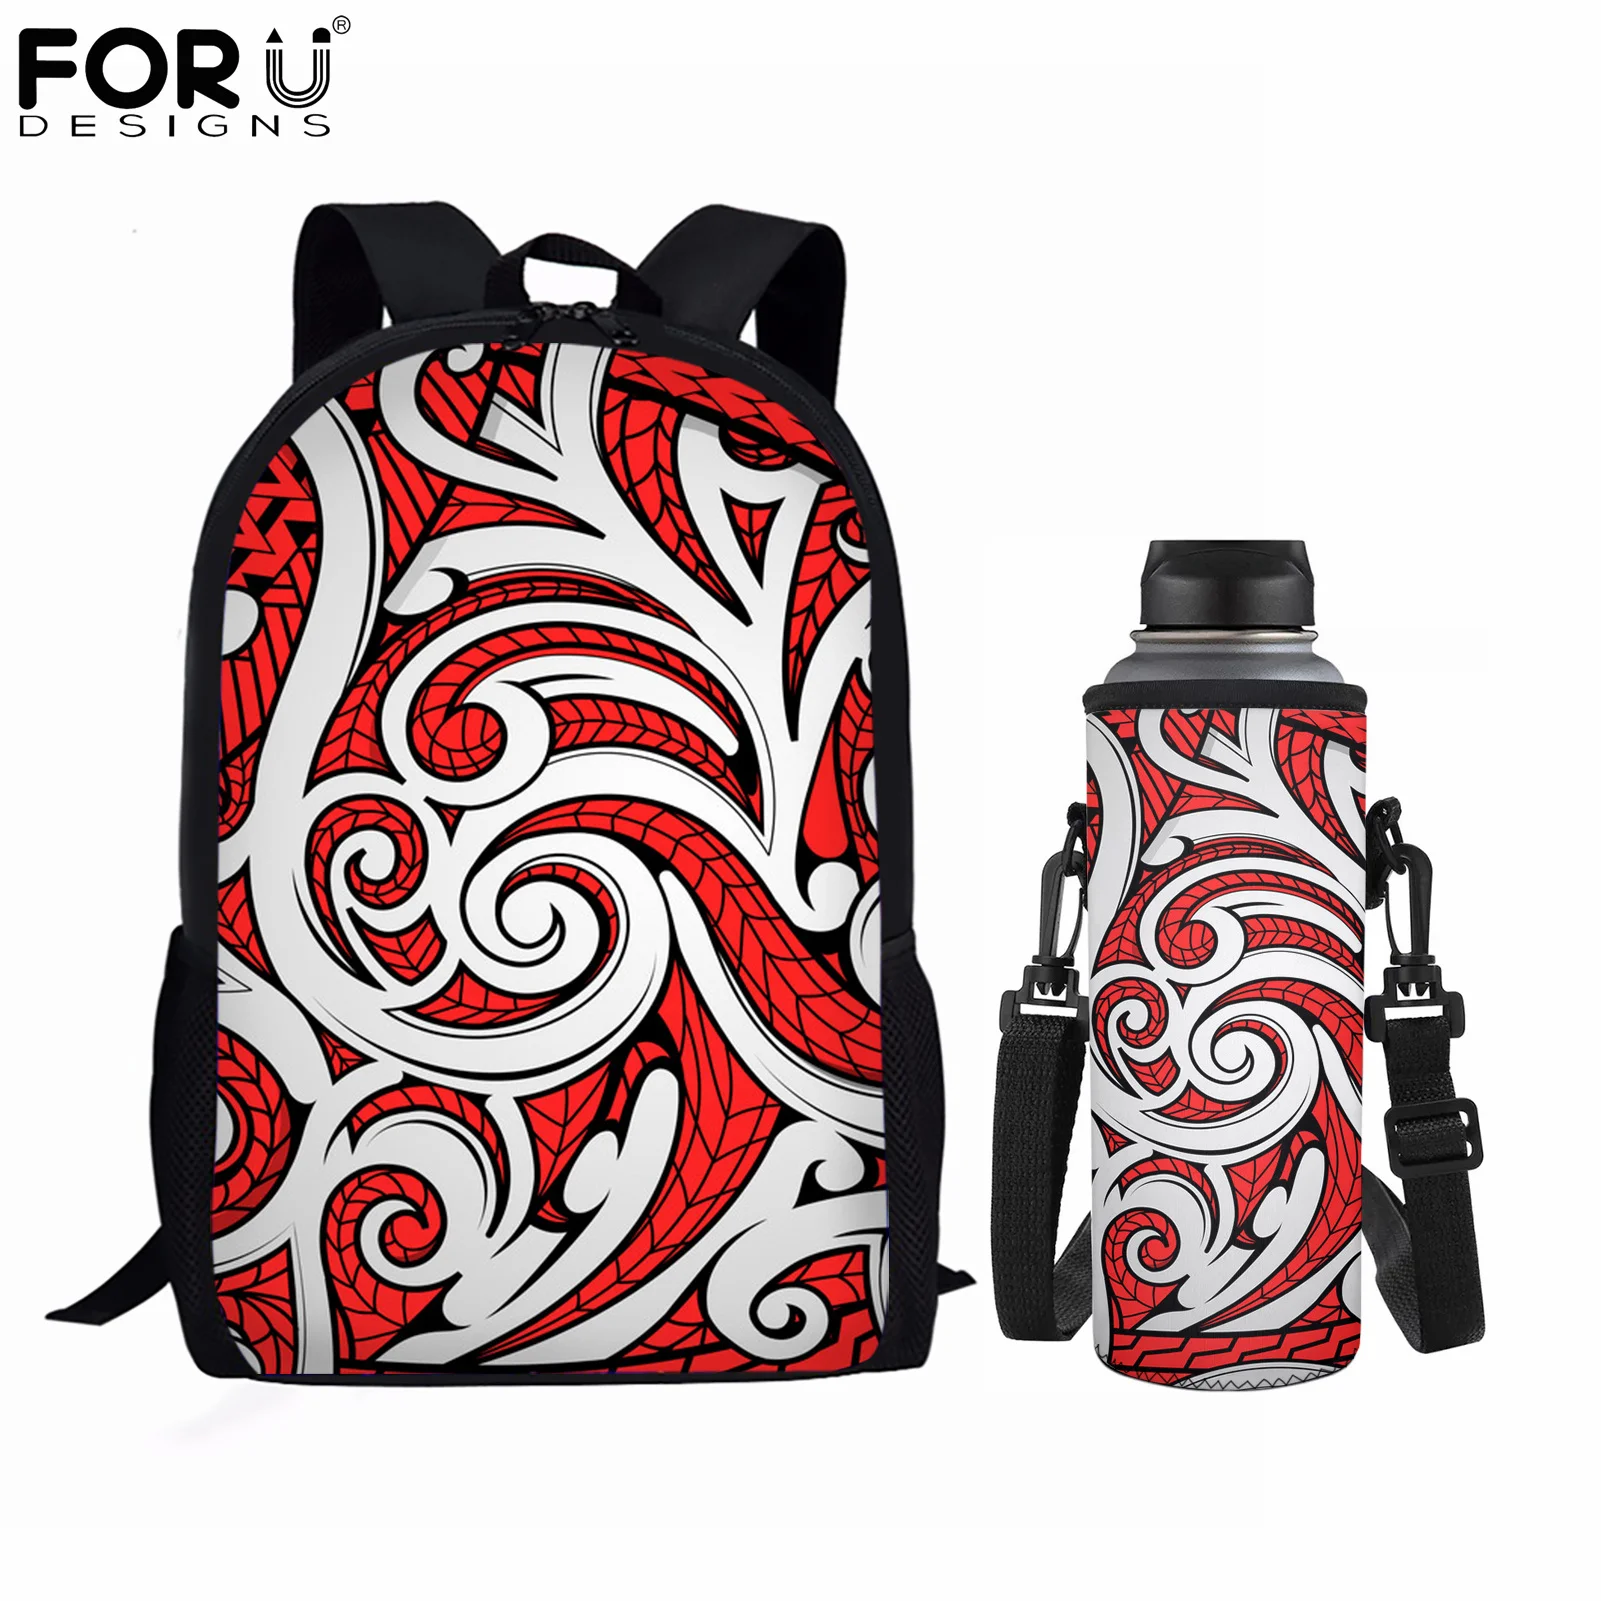 

FORUDESIGNS Fashion Teenage Backpacks Large Canvas Bookbags Polynesian Maori Tribal Design Schoolbags Set Backpack Bottle Covers